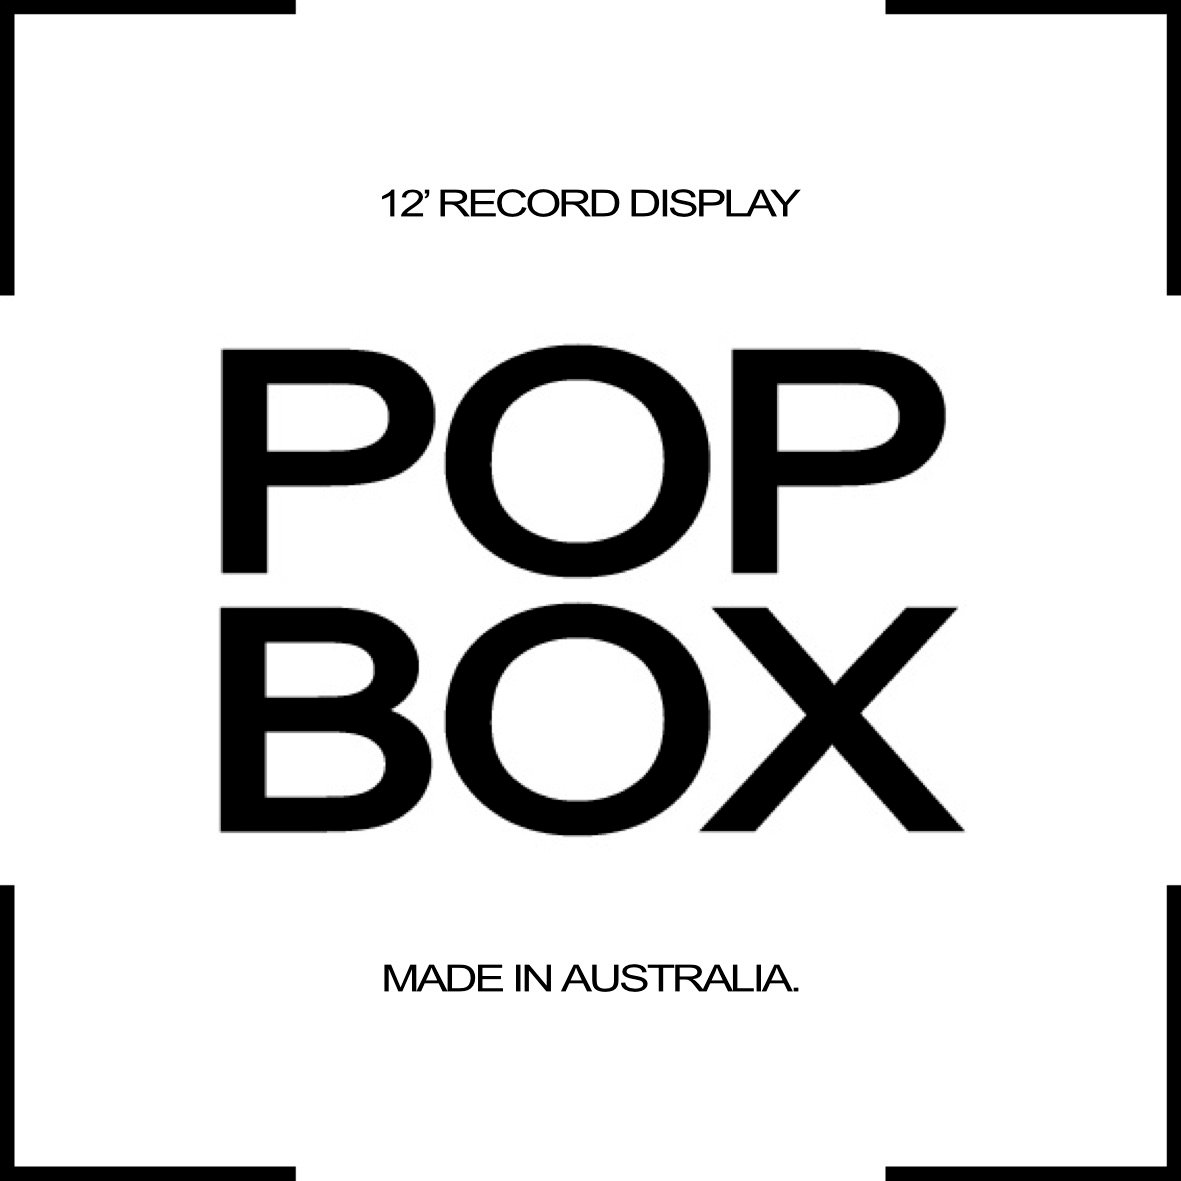 POP BOX DISPLAY